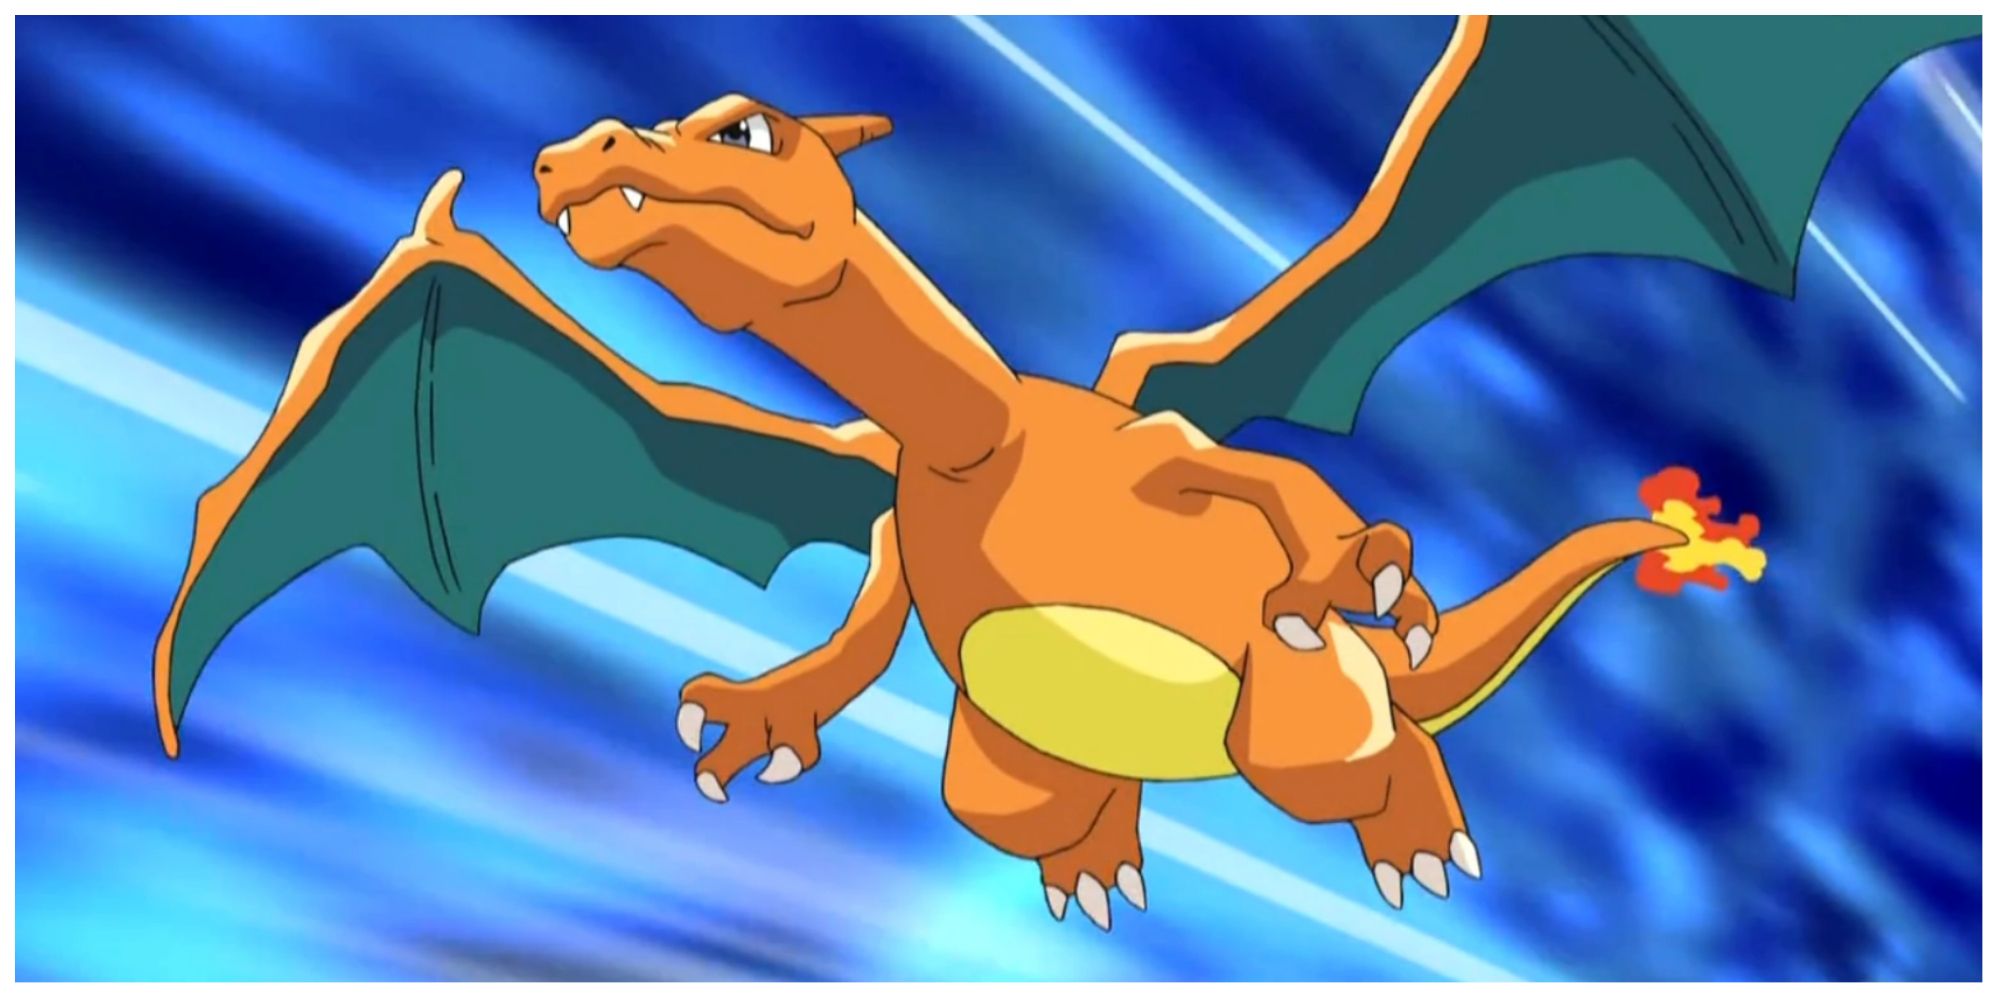 Ash's Charizard flying in the Pokémon anime.